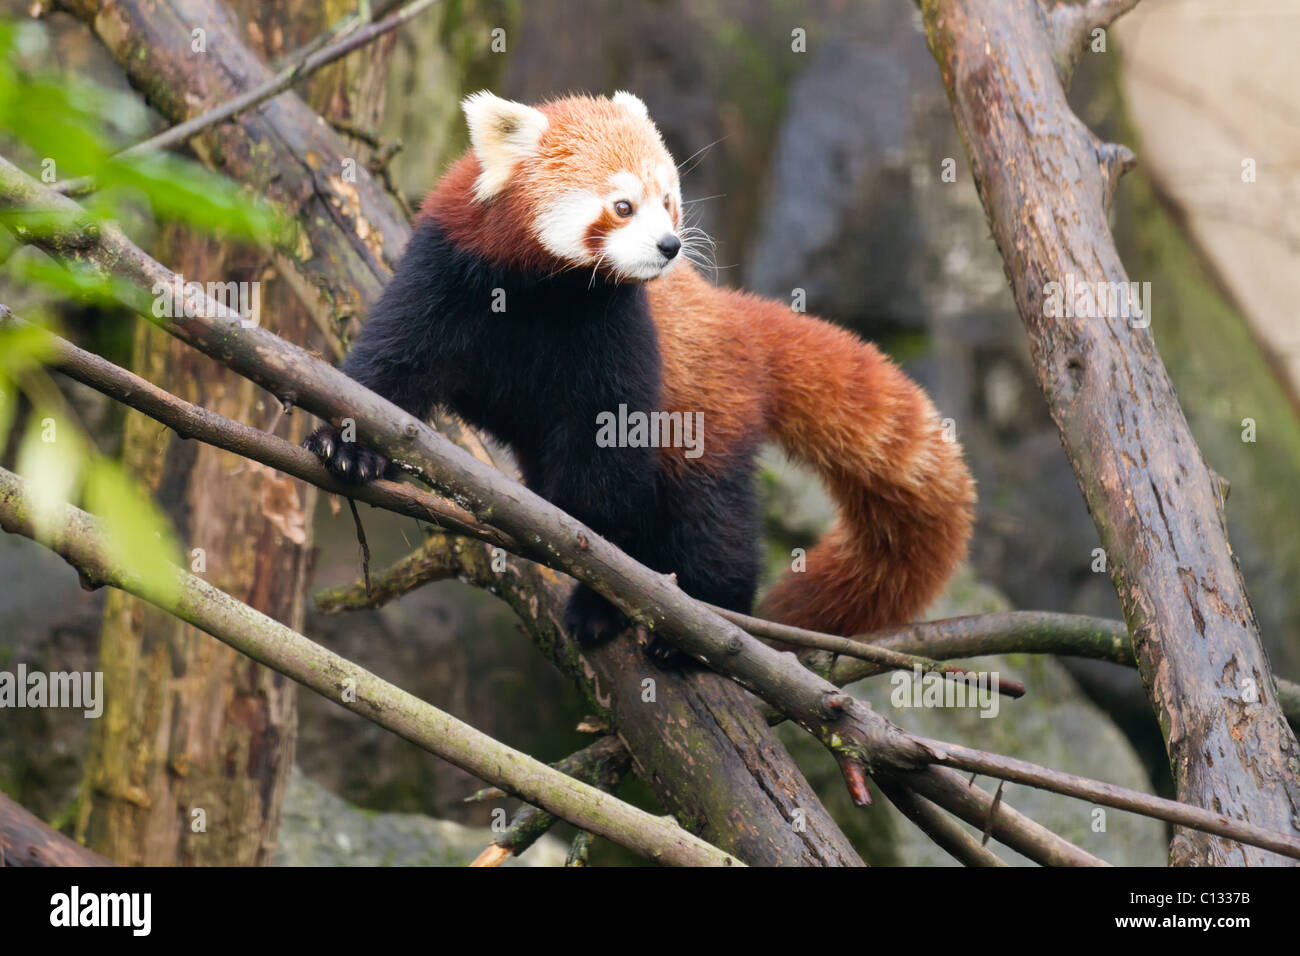 Jasmina le panda rouge escalade un arbre au zoo de Bristol. Banque D'Images